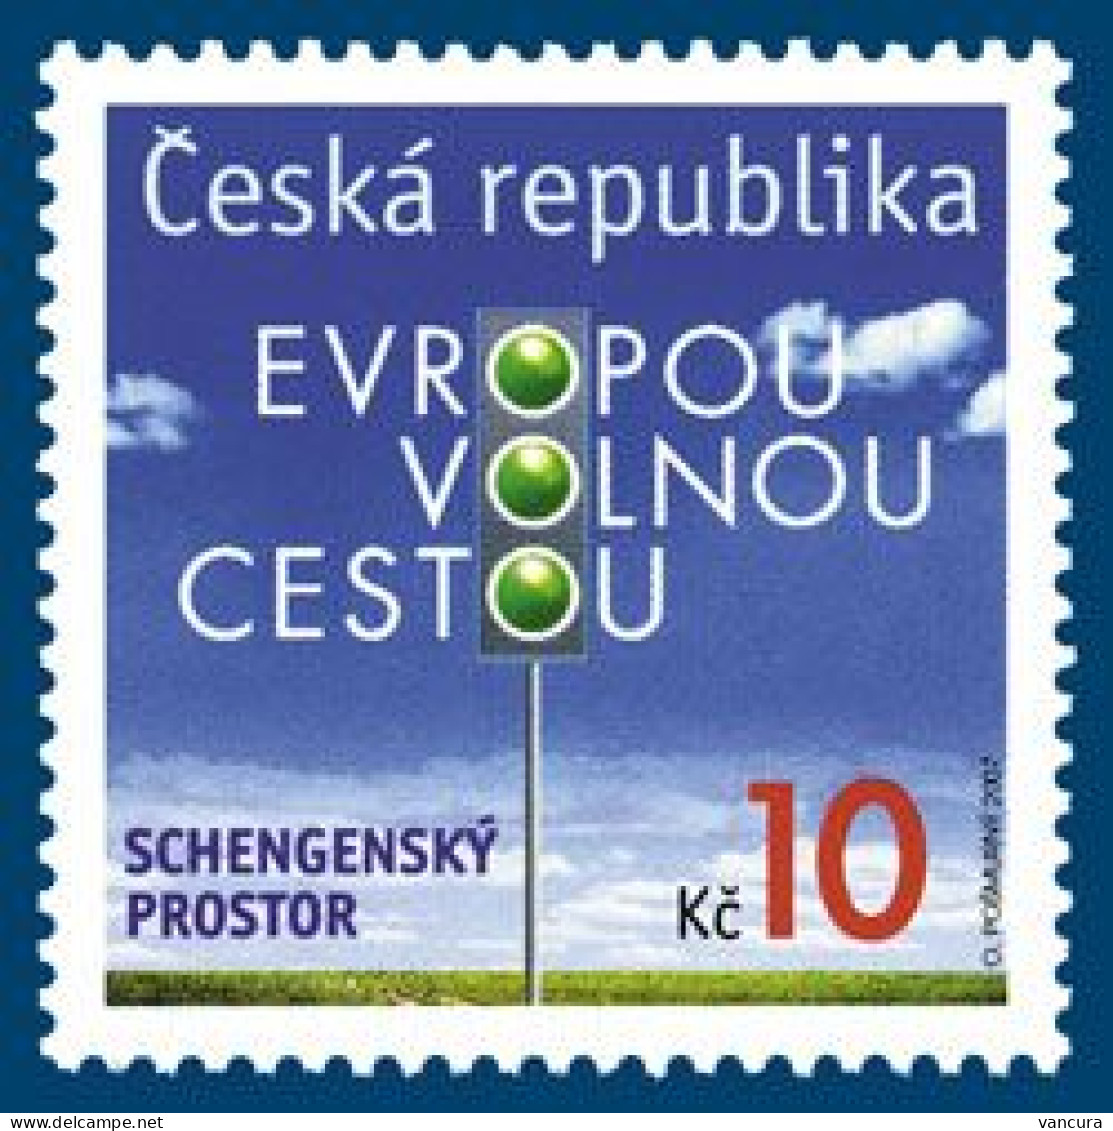 ** 538 Czech Republic In The Schengen Area 2007 - European Community